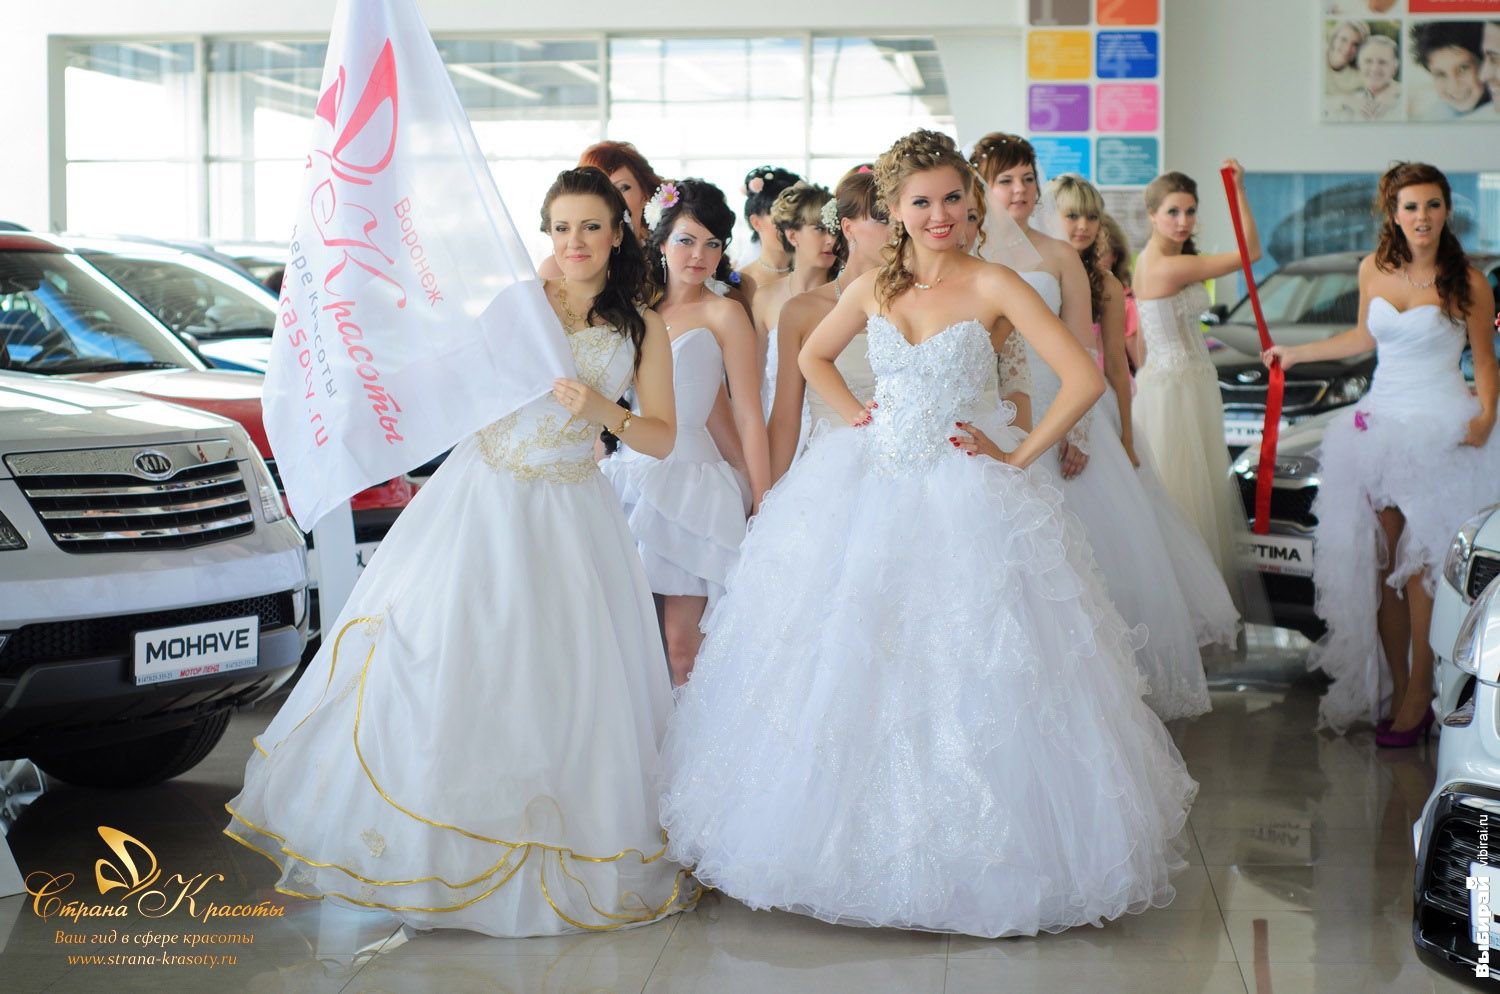 Страна невест Одноклассники